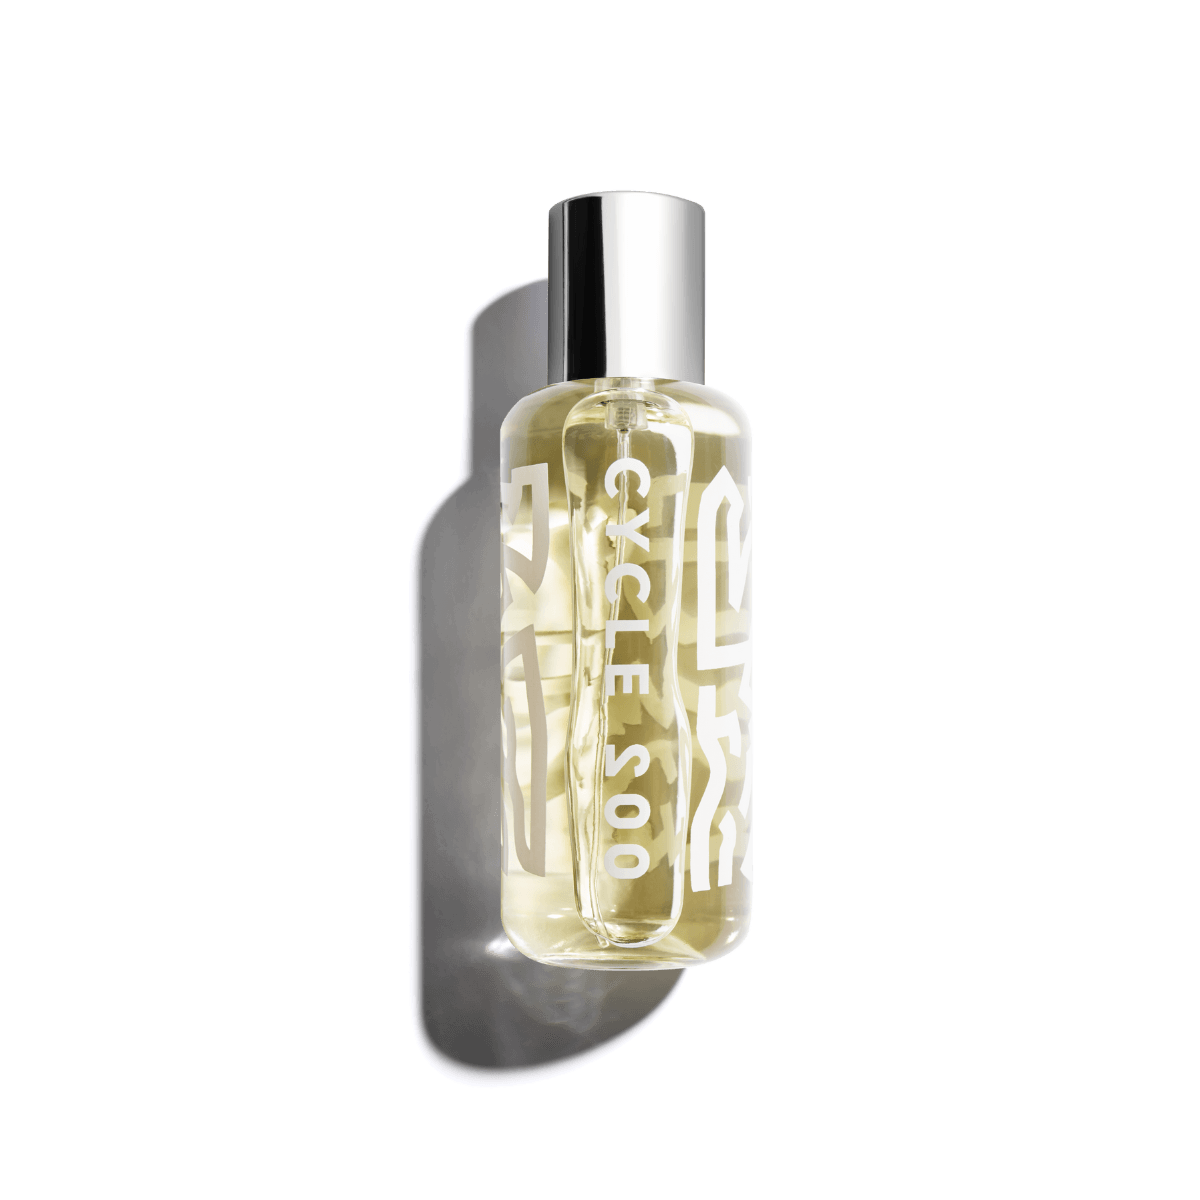 Image of Cycle 002 eau de parfum by the perfume brand Violet